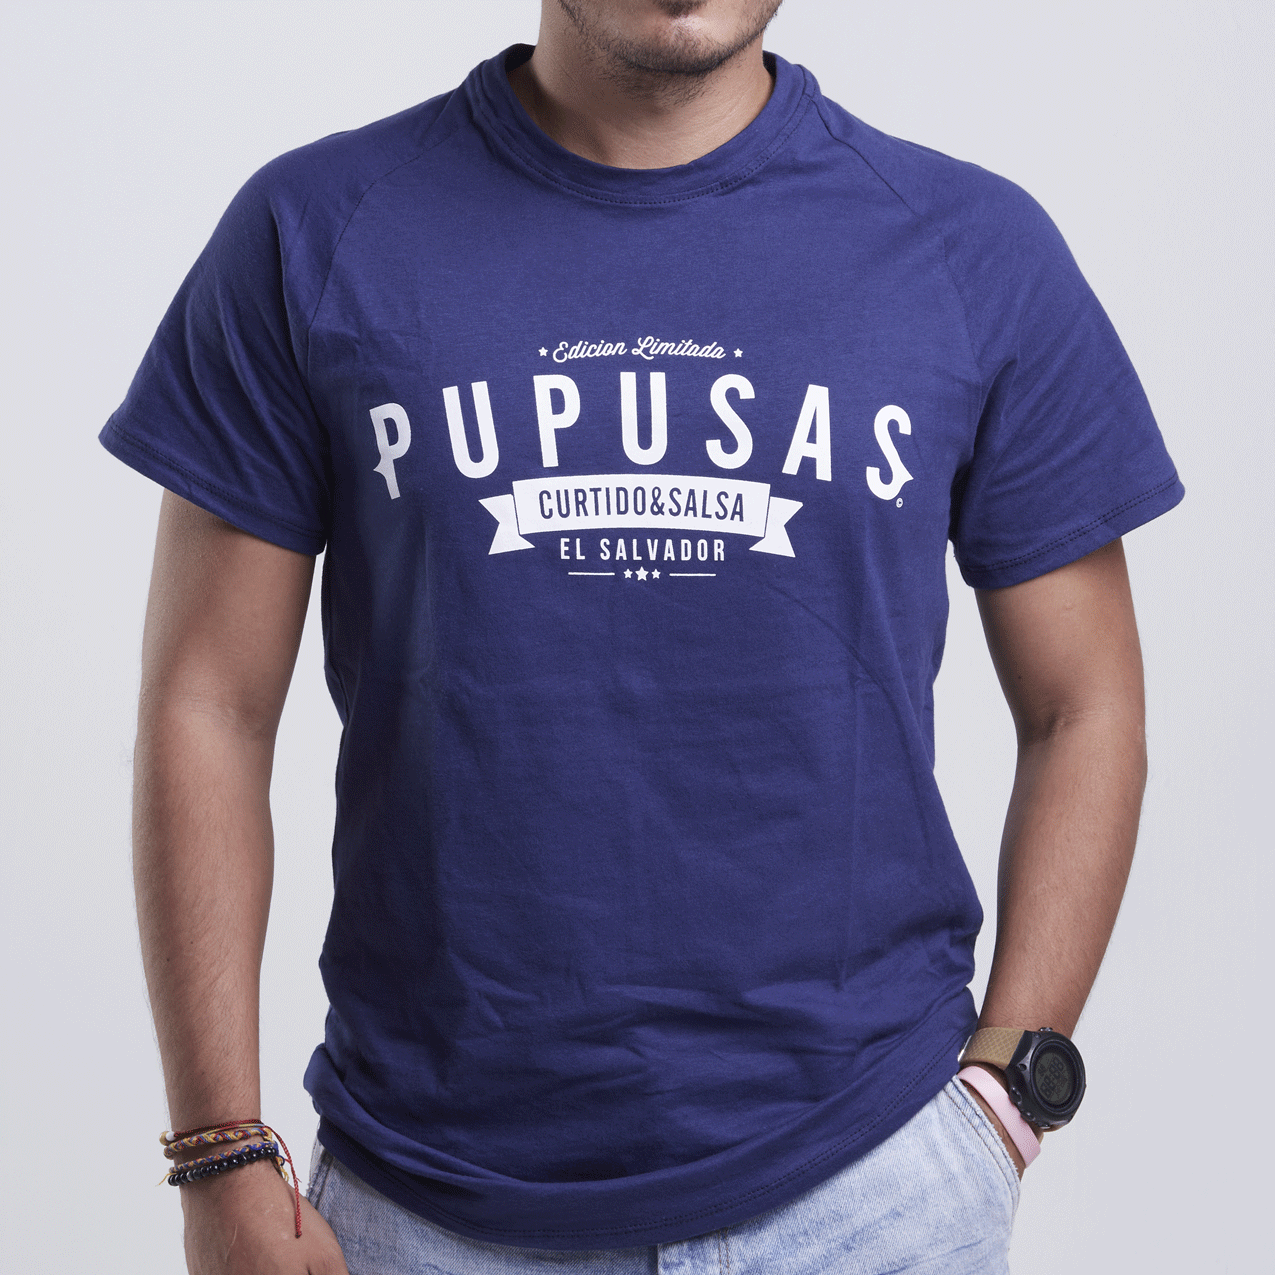 Pupusa One Color T-shirt 